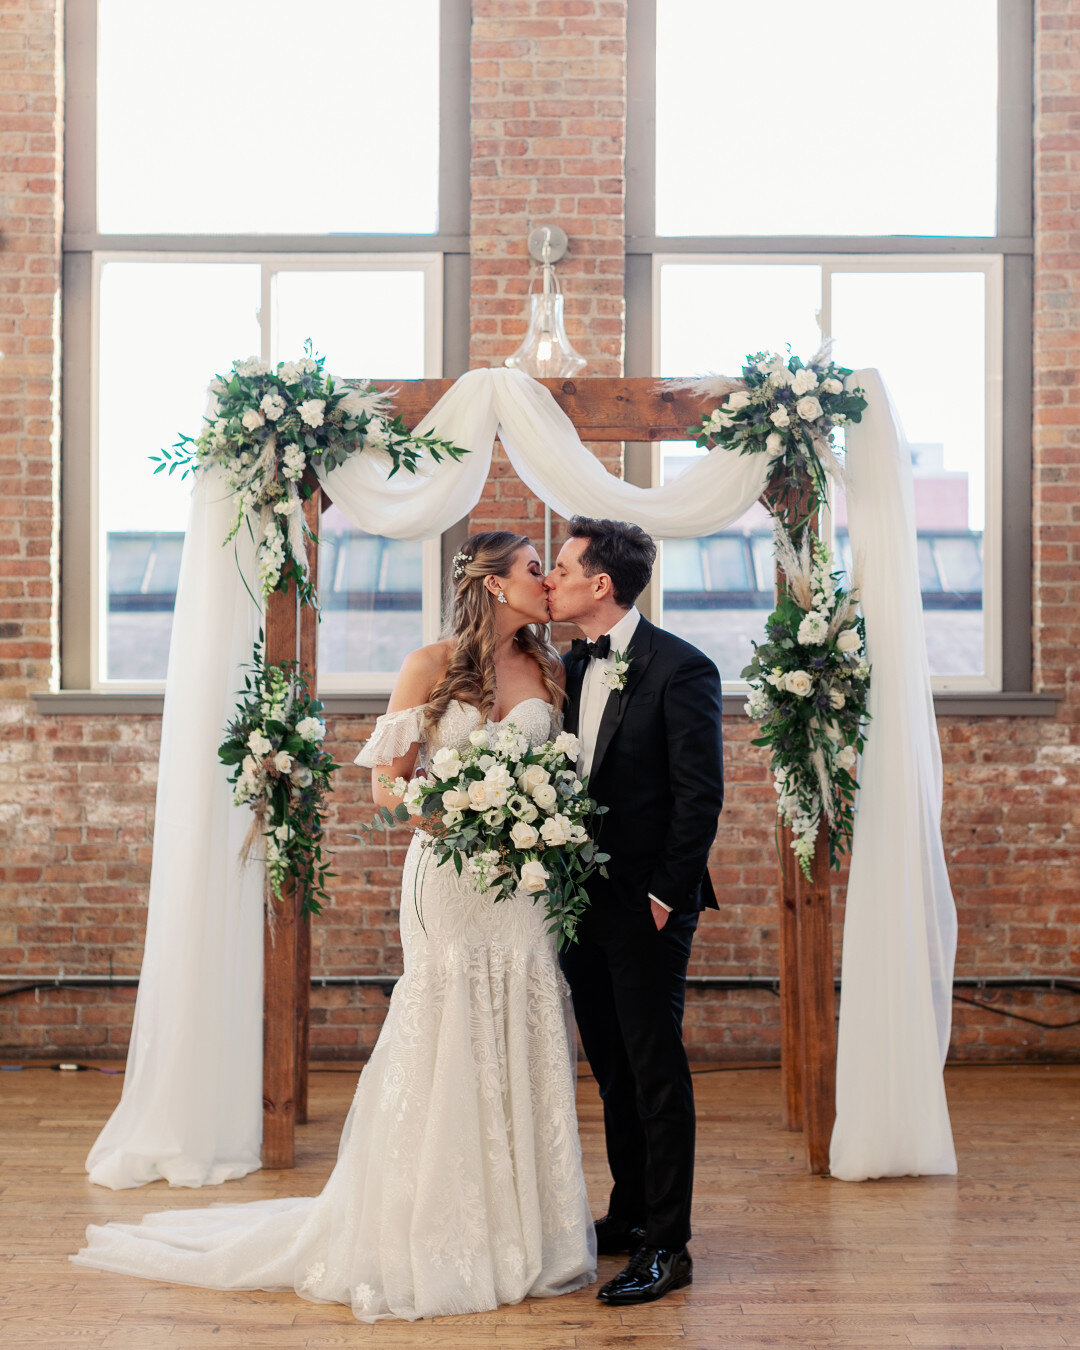 The perfect setting for any love story ❤
📸 @JanelleRosePhotography 
#kitchenchicago #cityviewloft #lmcaters #loftwedding #lovestory 
.
.
.
.
#eventdecor #eventdesign #realwedding #wedding #happilyeverafter #weddinginspo #weddinginspiration #chicagow